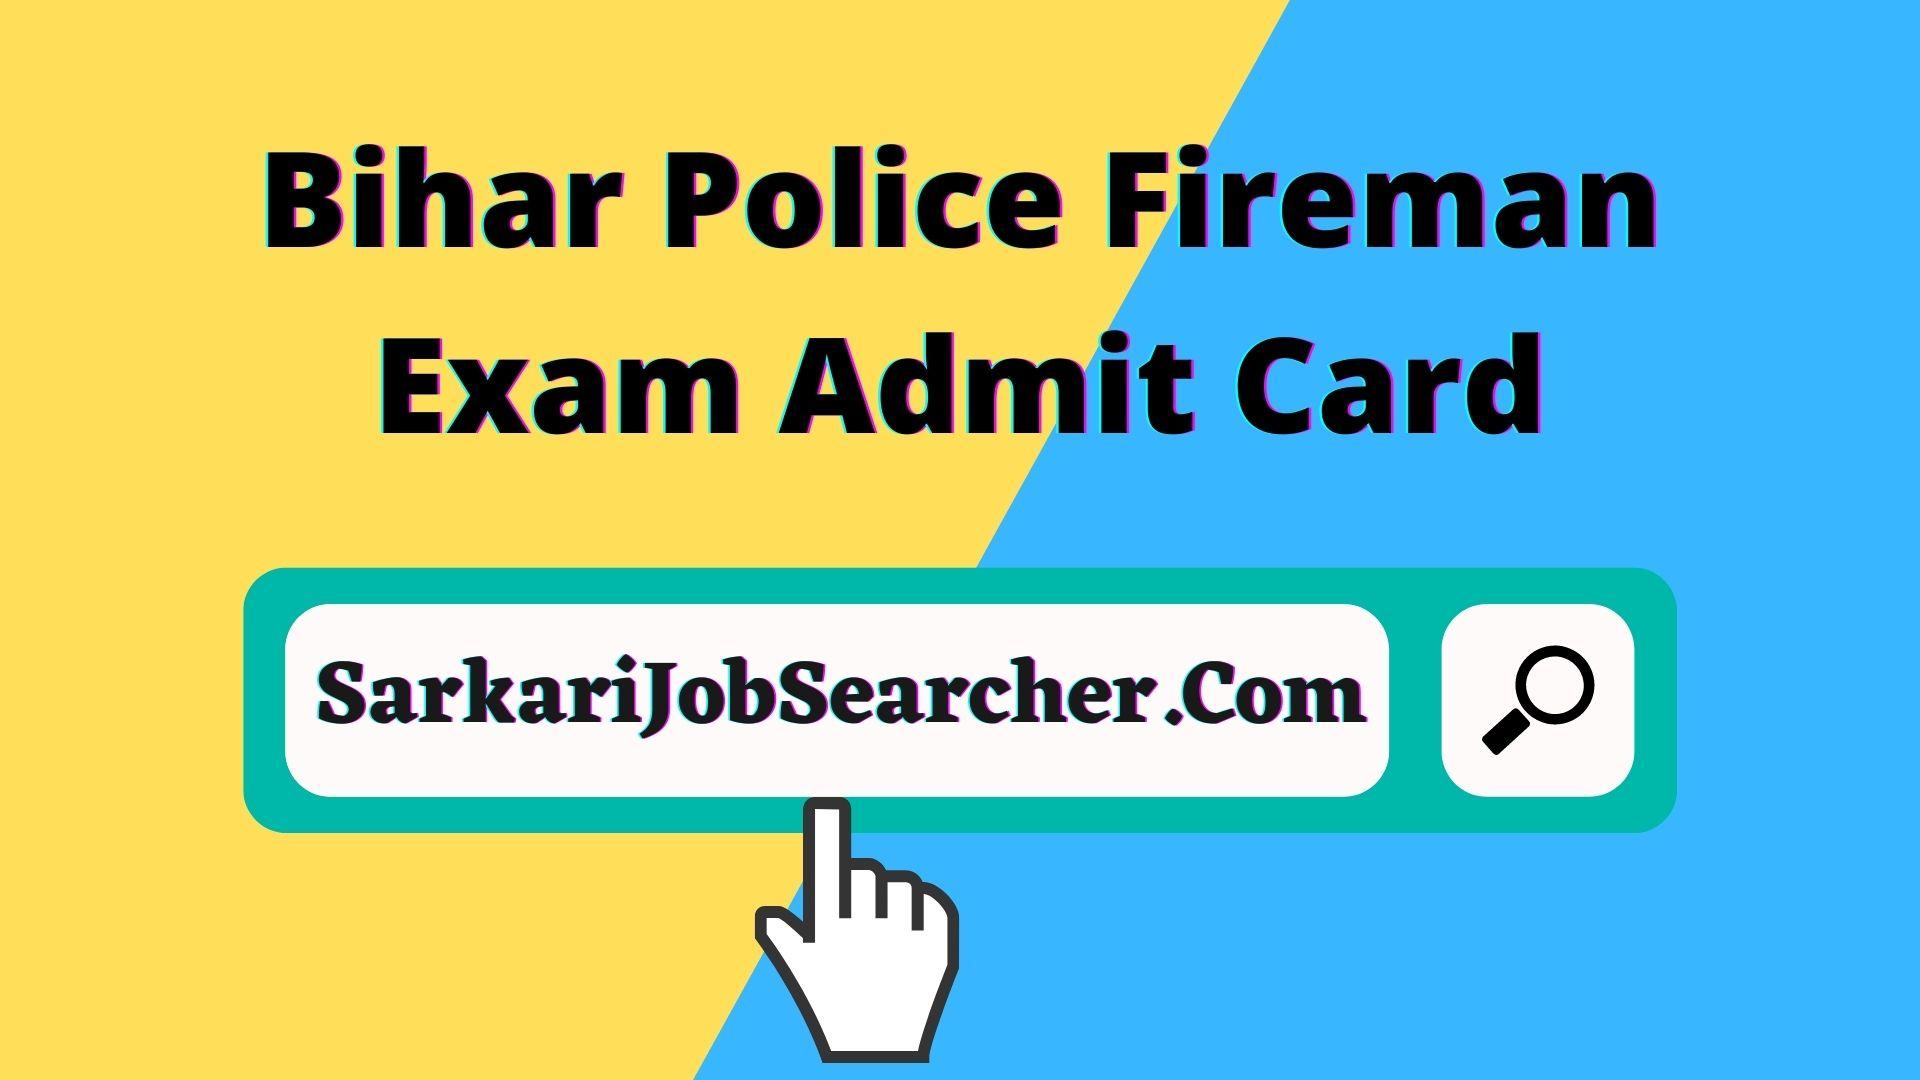 Bihar Police Fireman Exam Admit Card